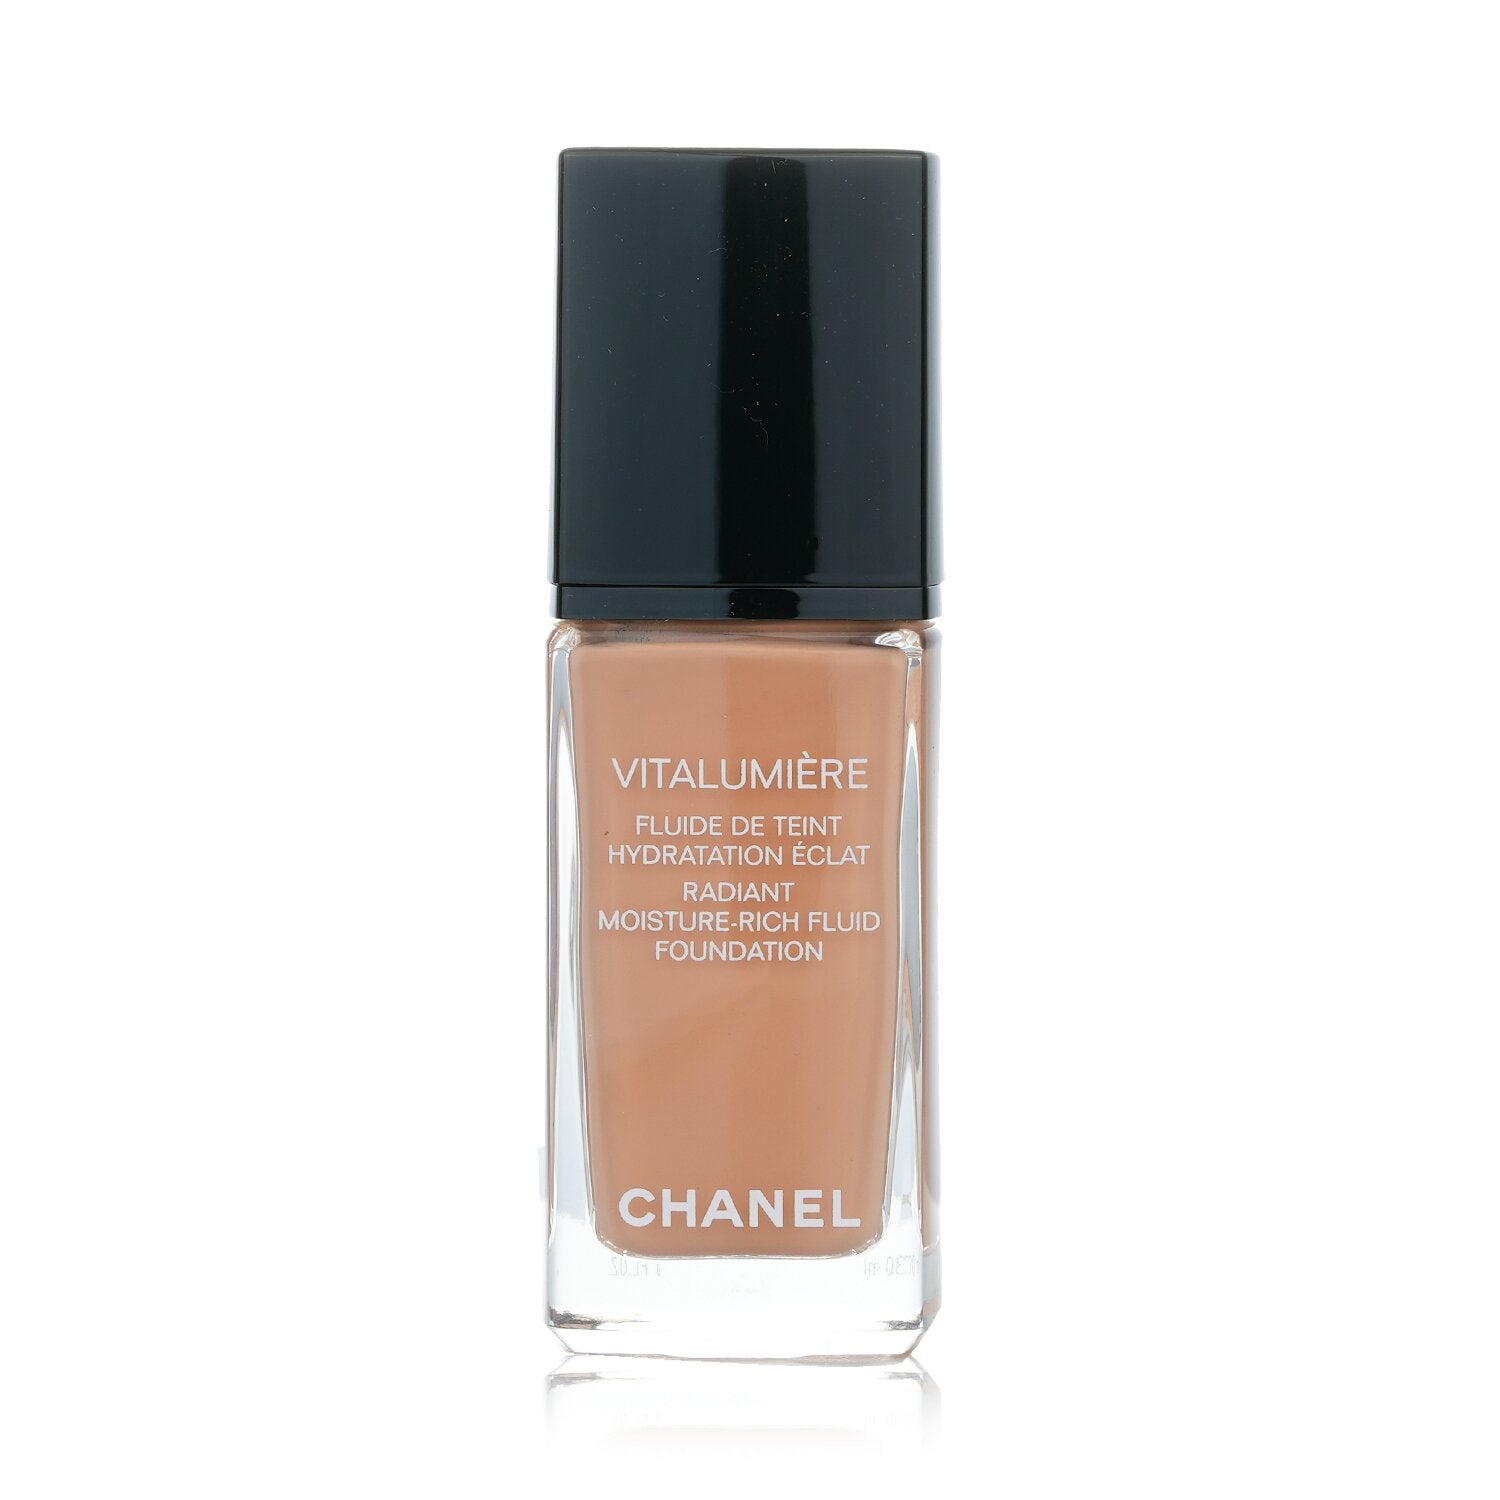 Chanel Vitalumiere Radiant Moisture Rich Fluid Foundation - #41 Natural ...